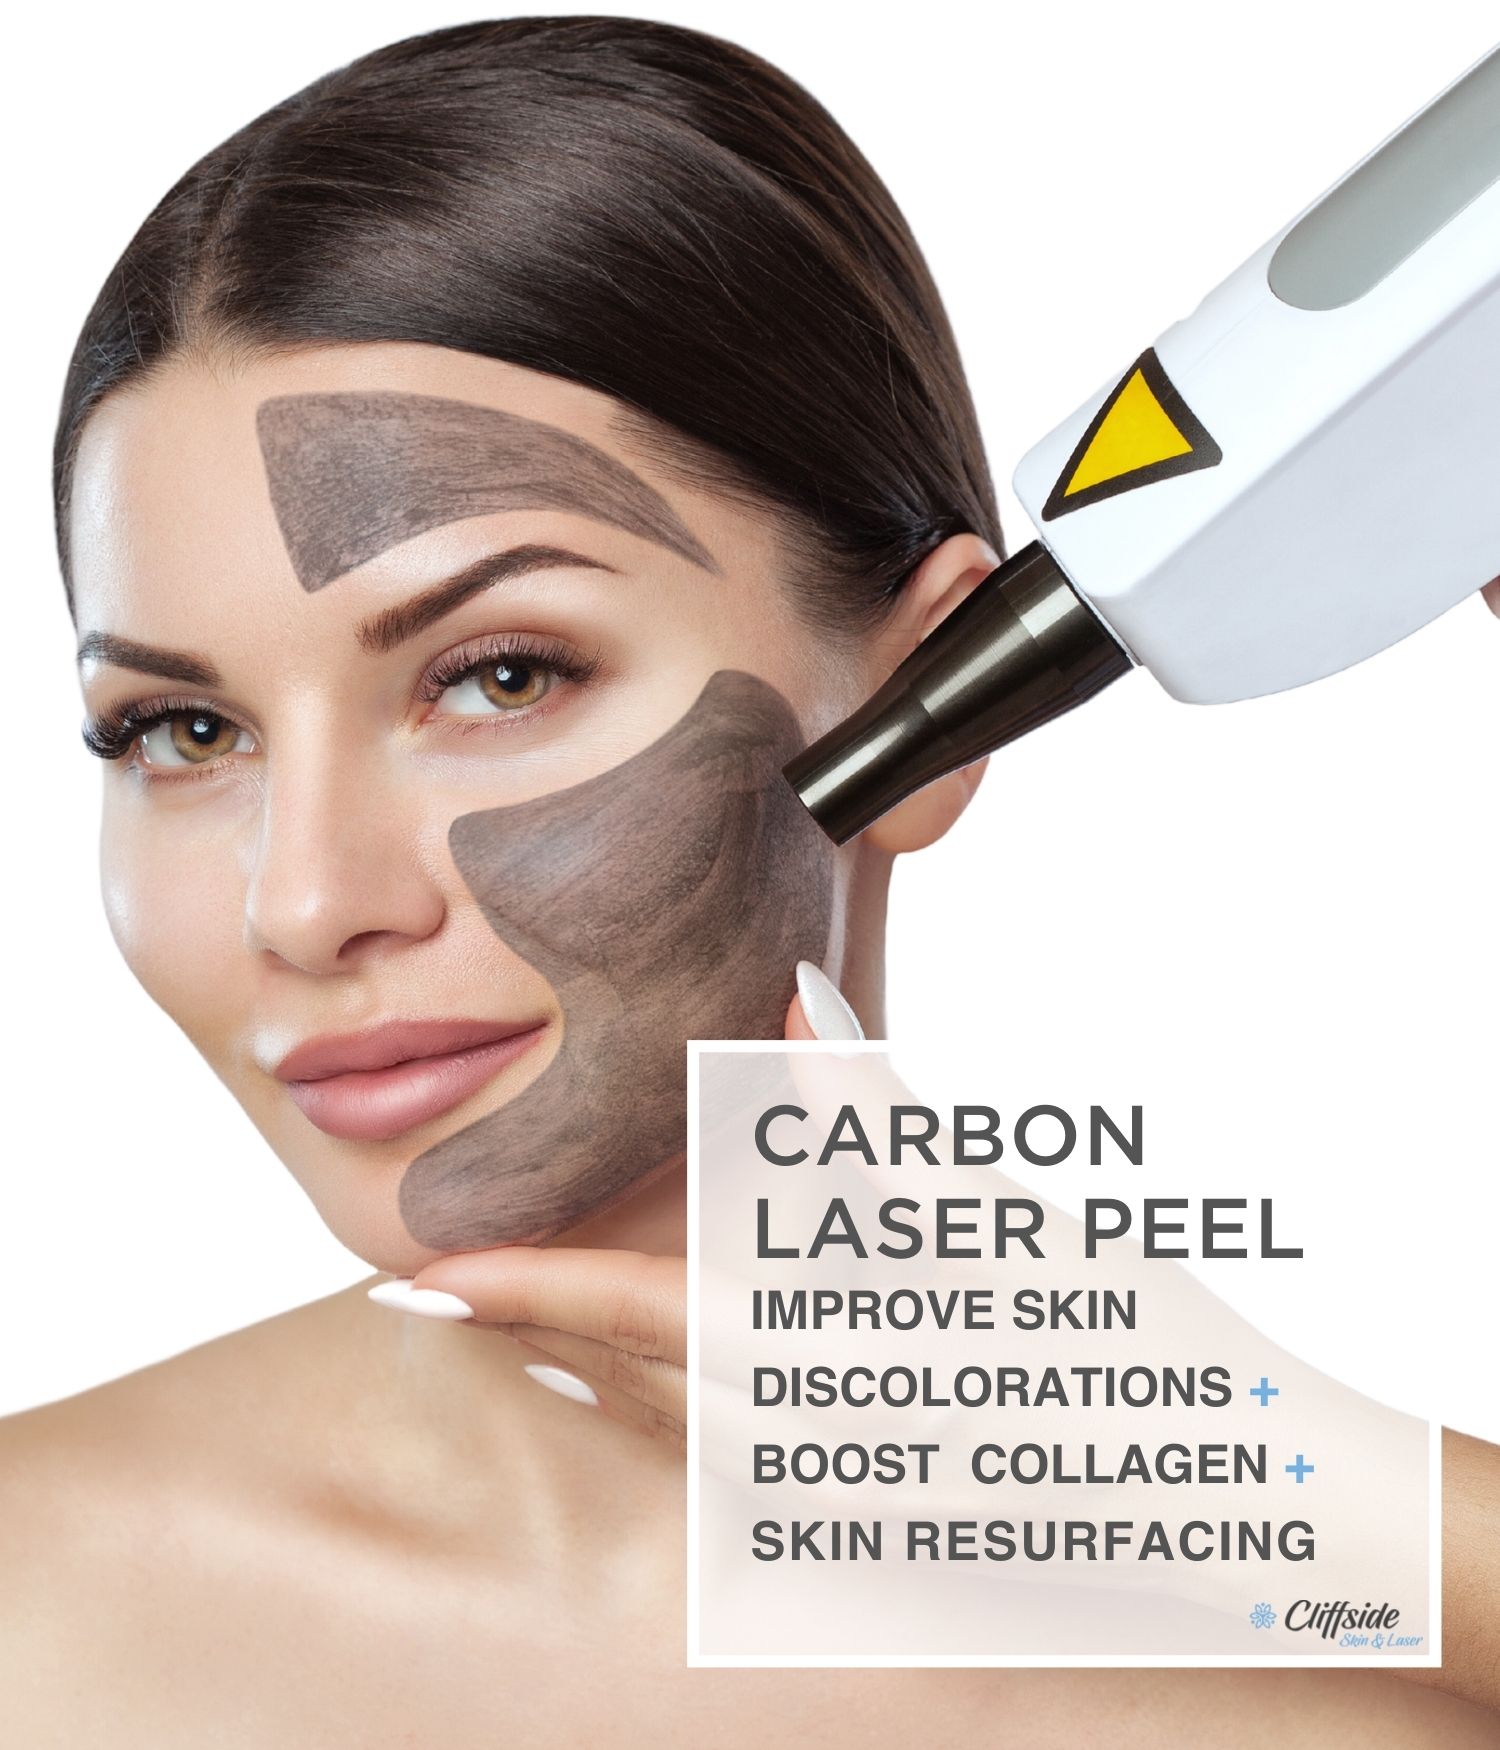 Carbon Peel Laser Benefits 